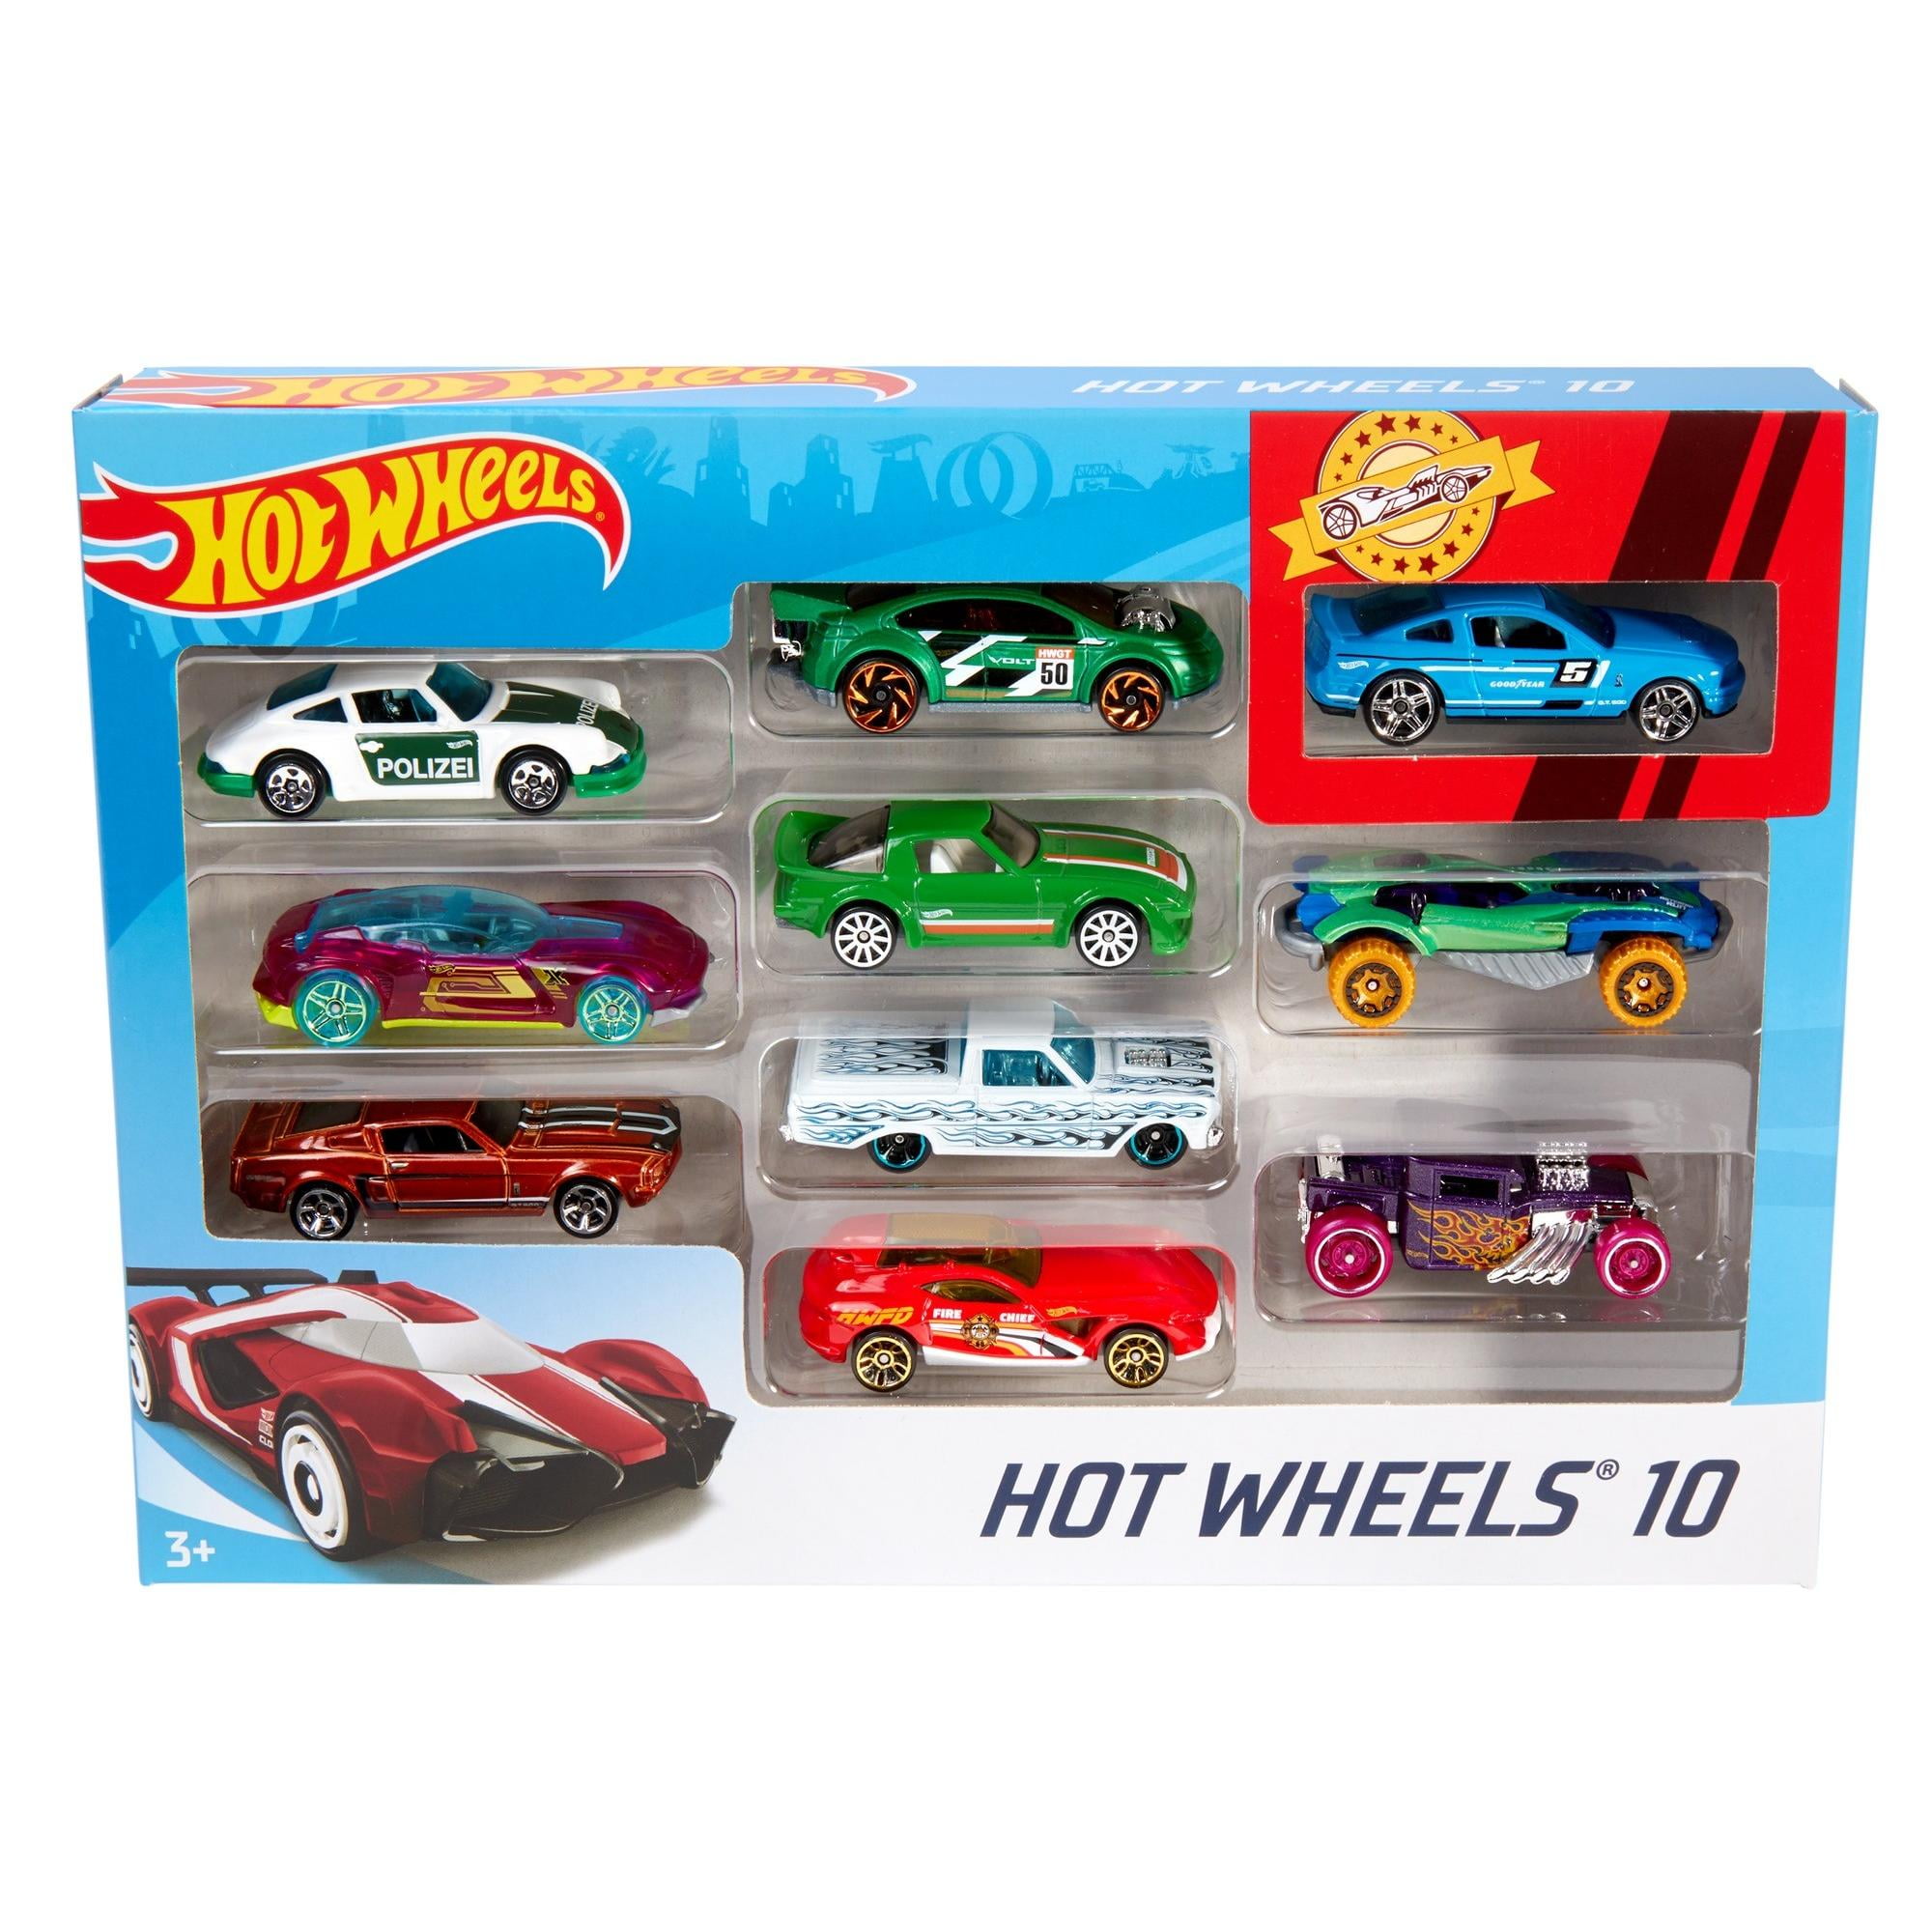 Hot Wheels Diecast 9 Car Gift Pack